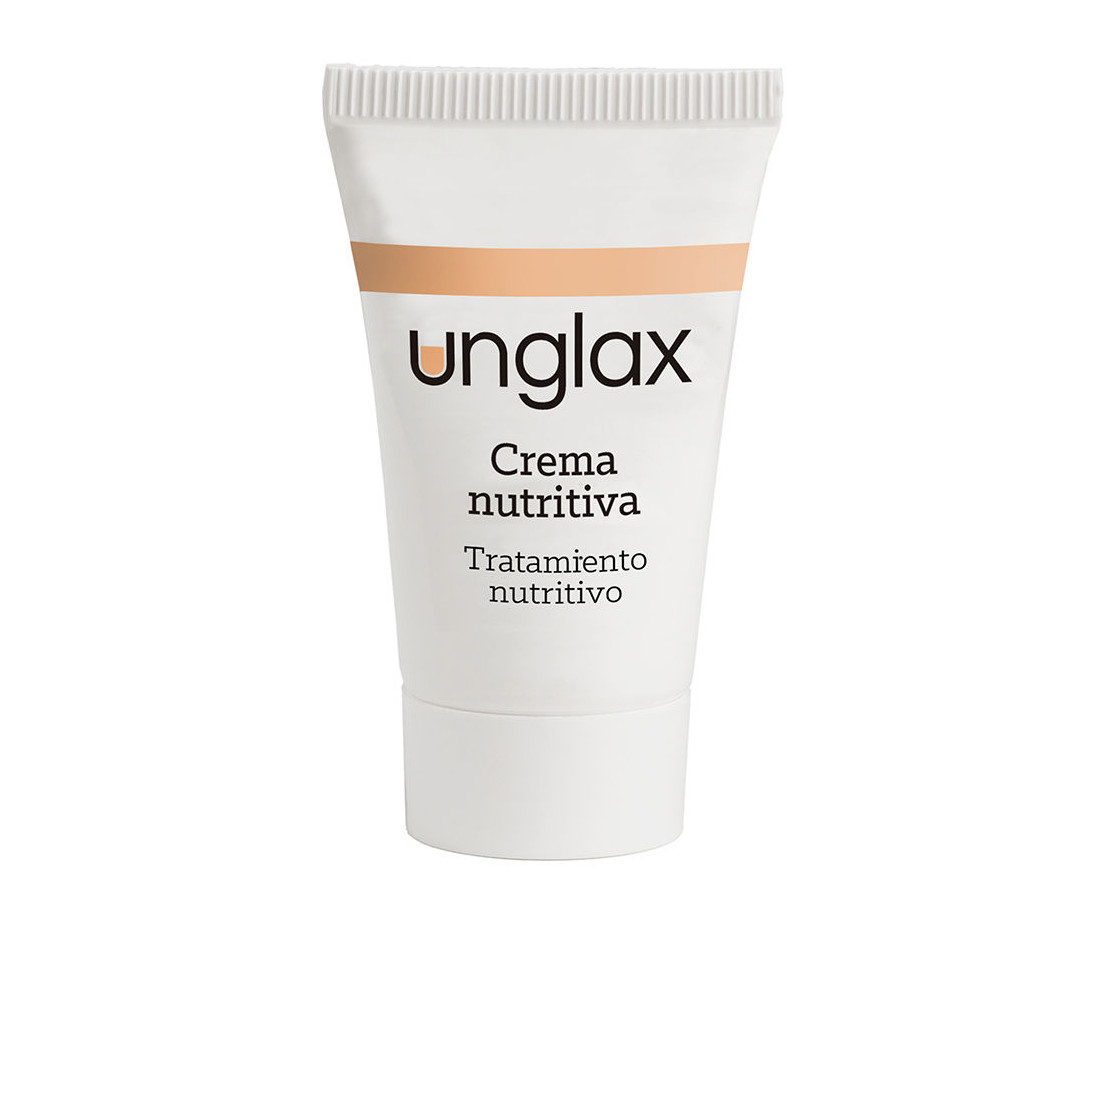 UNGLAX NAIL EXPERTS crema nutriente 15 ml